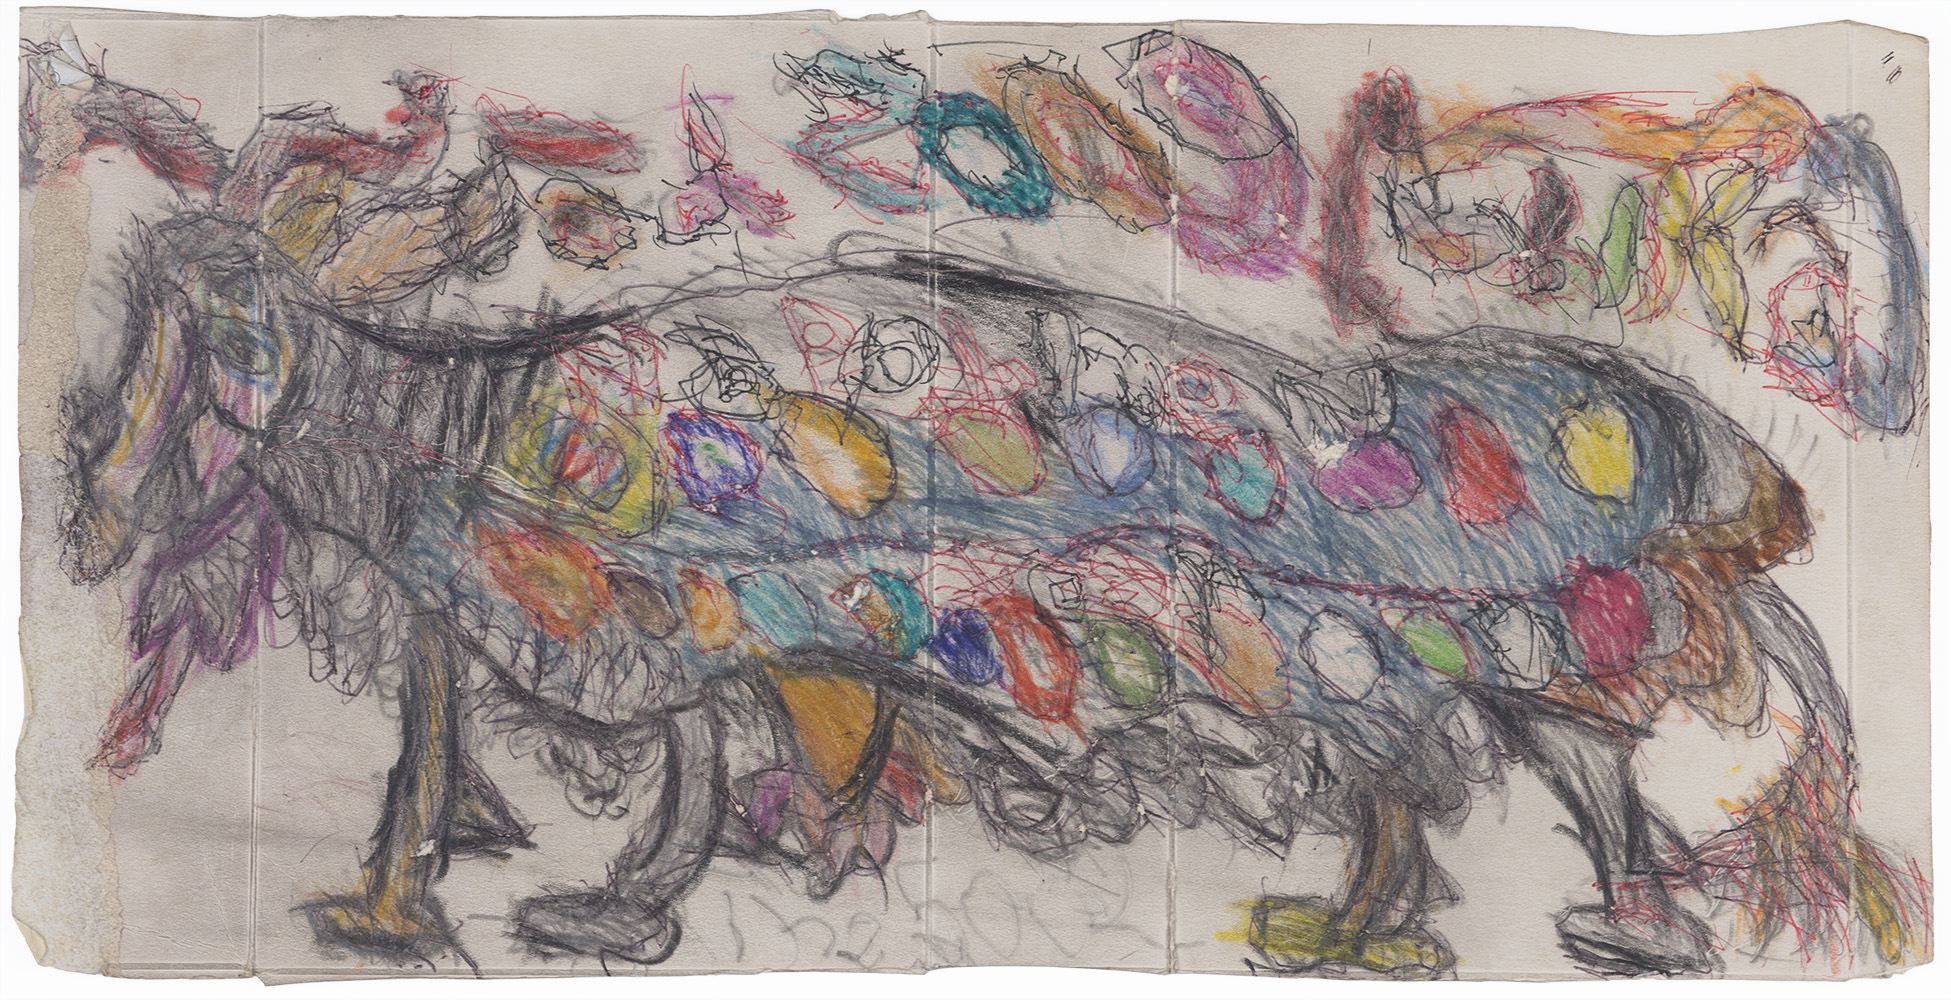   Ilya Natarevich    Untitled  , 2015 Ink, graphite, crayon on cardboard 8.75 x 17.25 inches 22.2 x 43.8 cm INa 6 